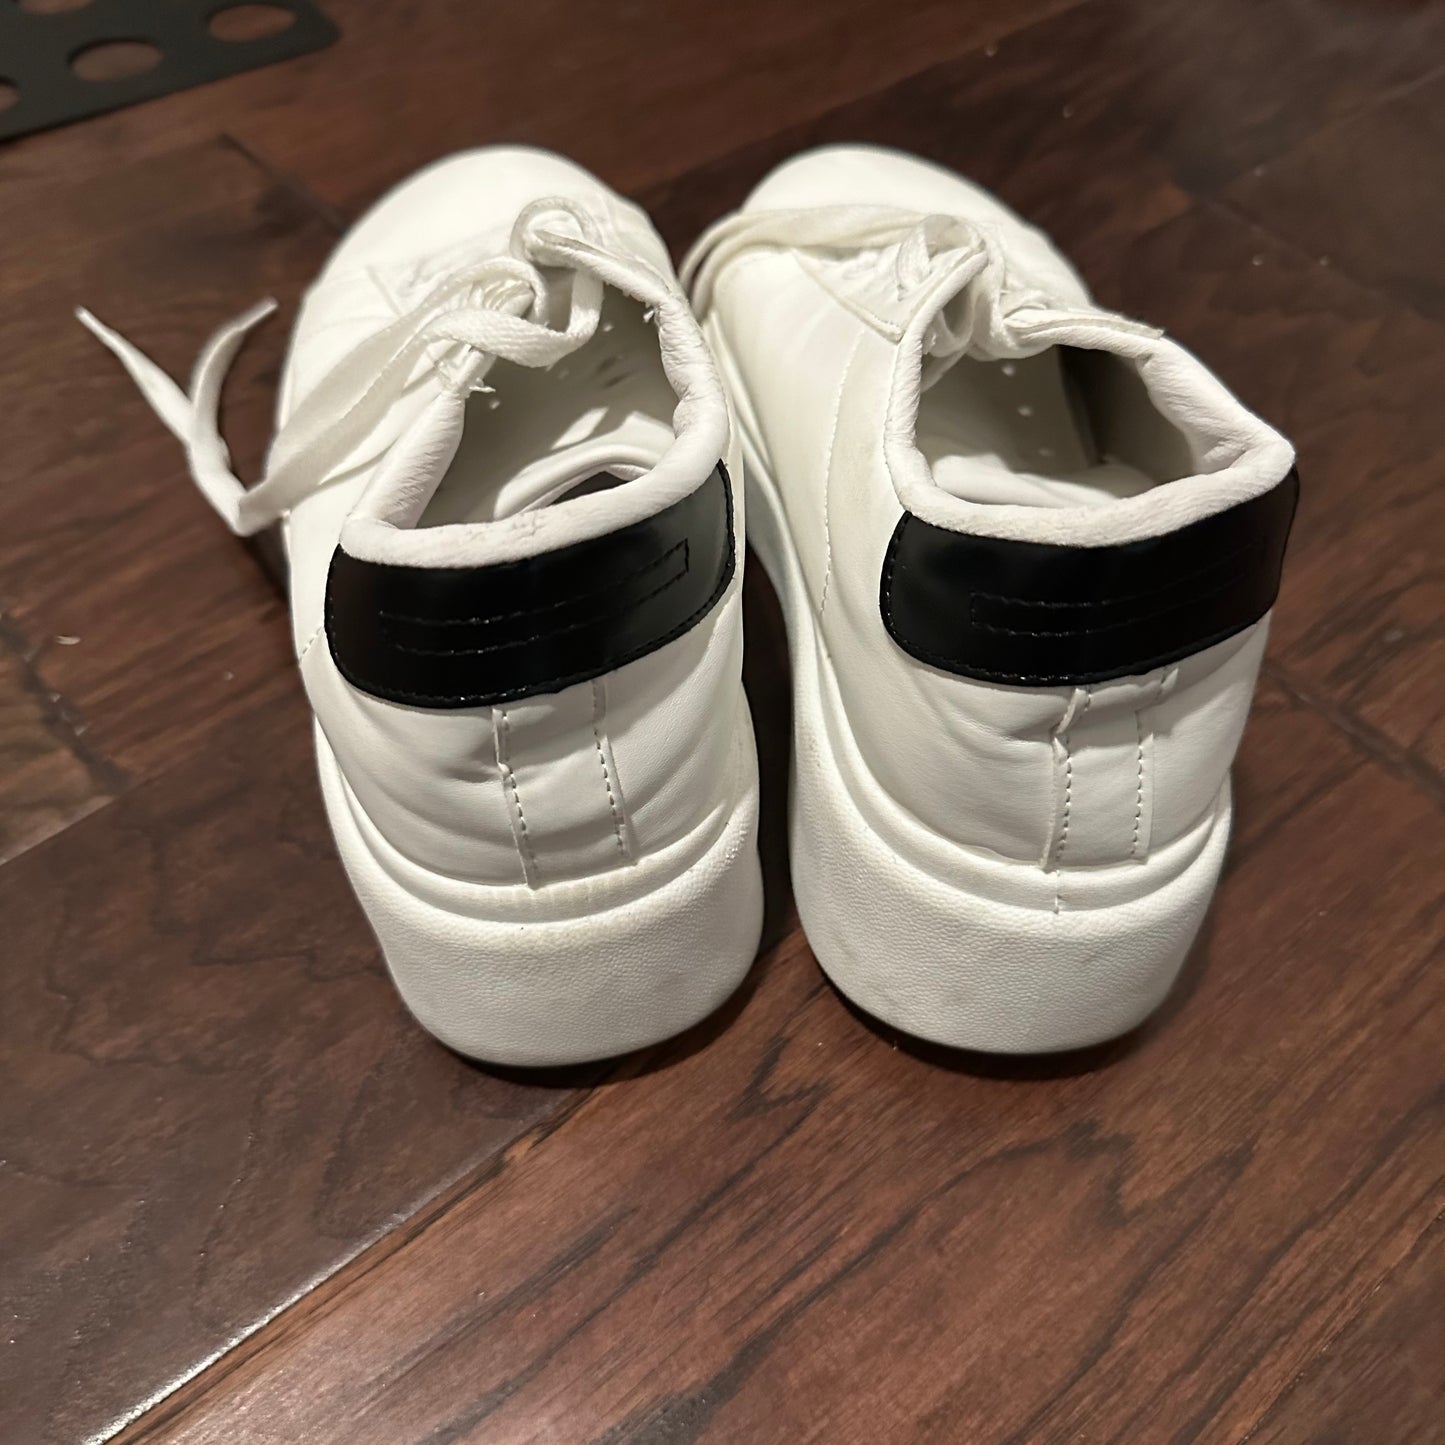 White platform Women’s shoes 8.5